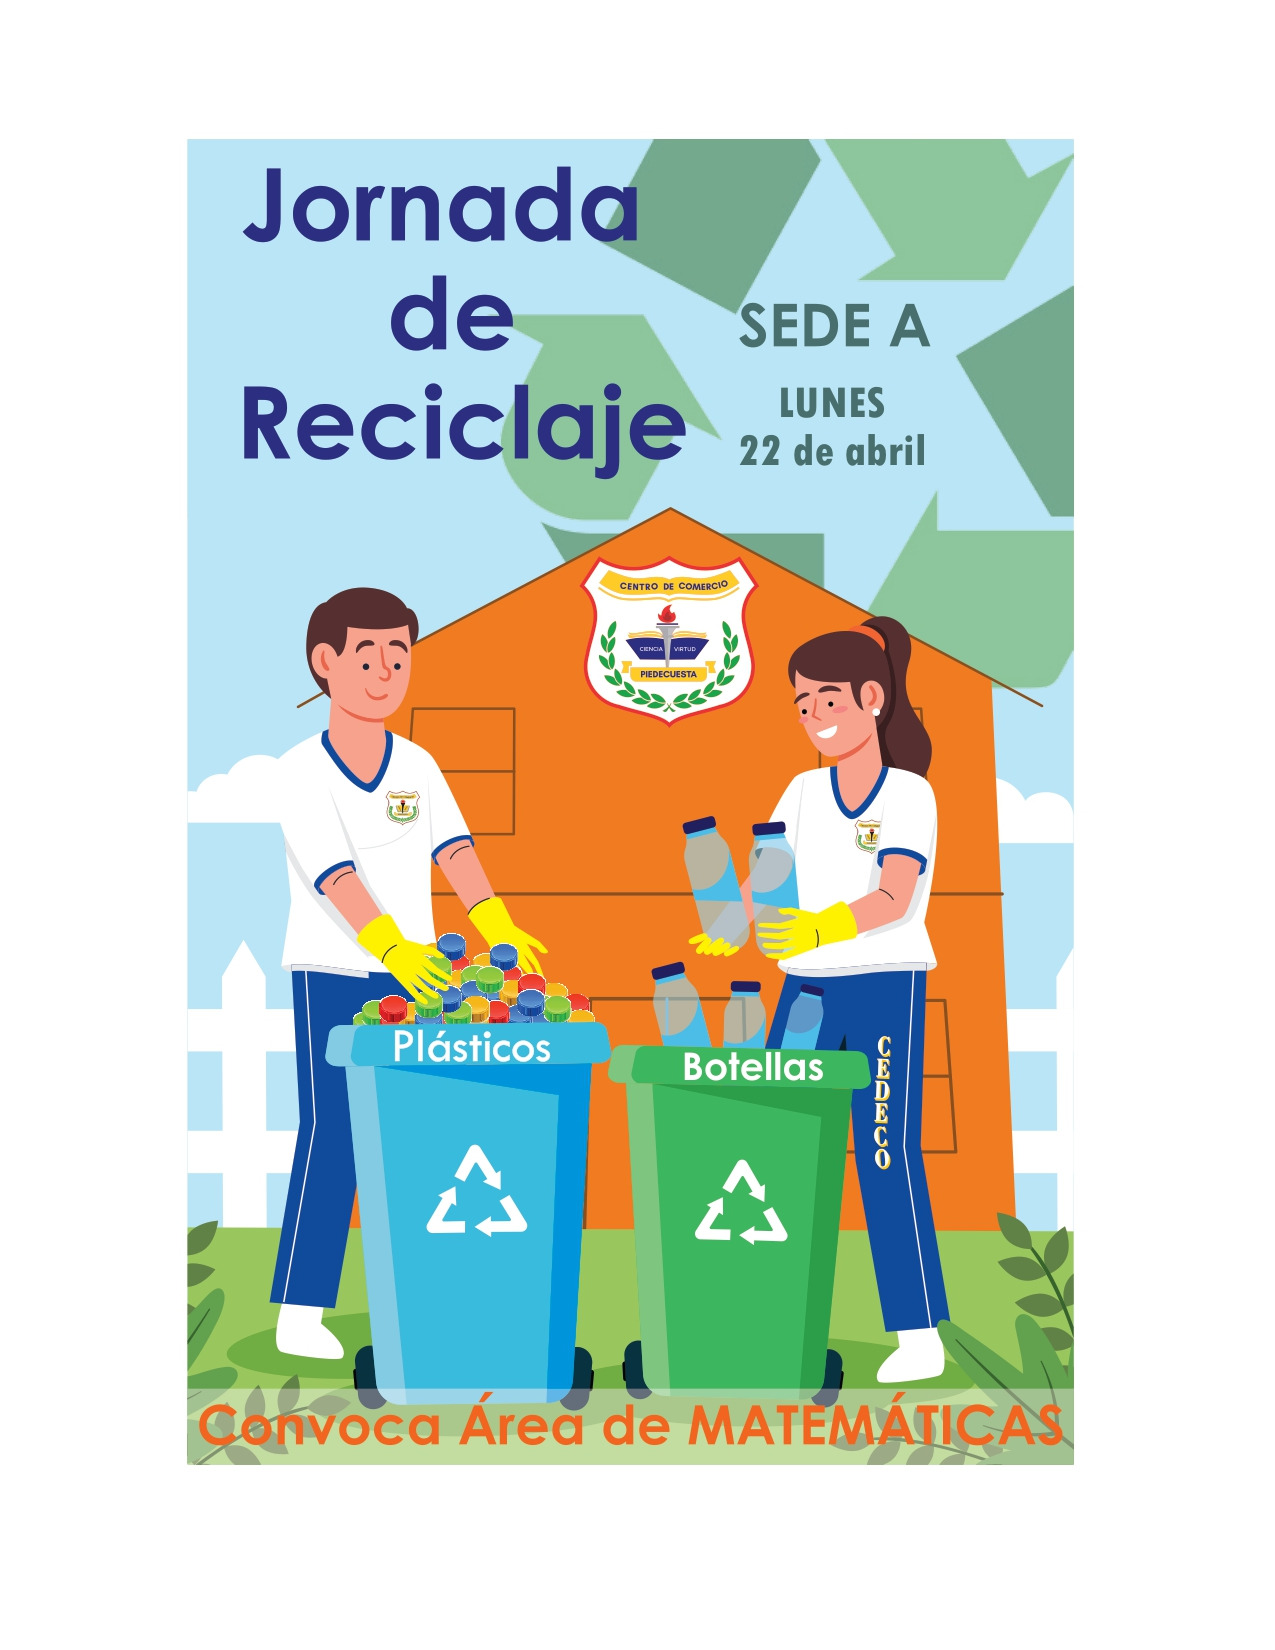 Sede A: Jornada de Reciclaje - Imagen 1